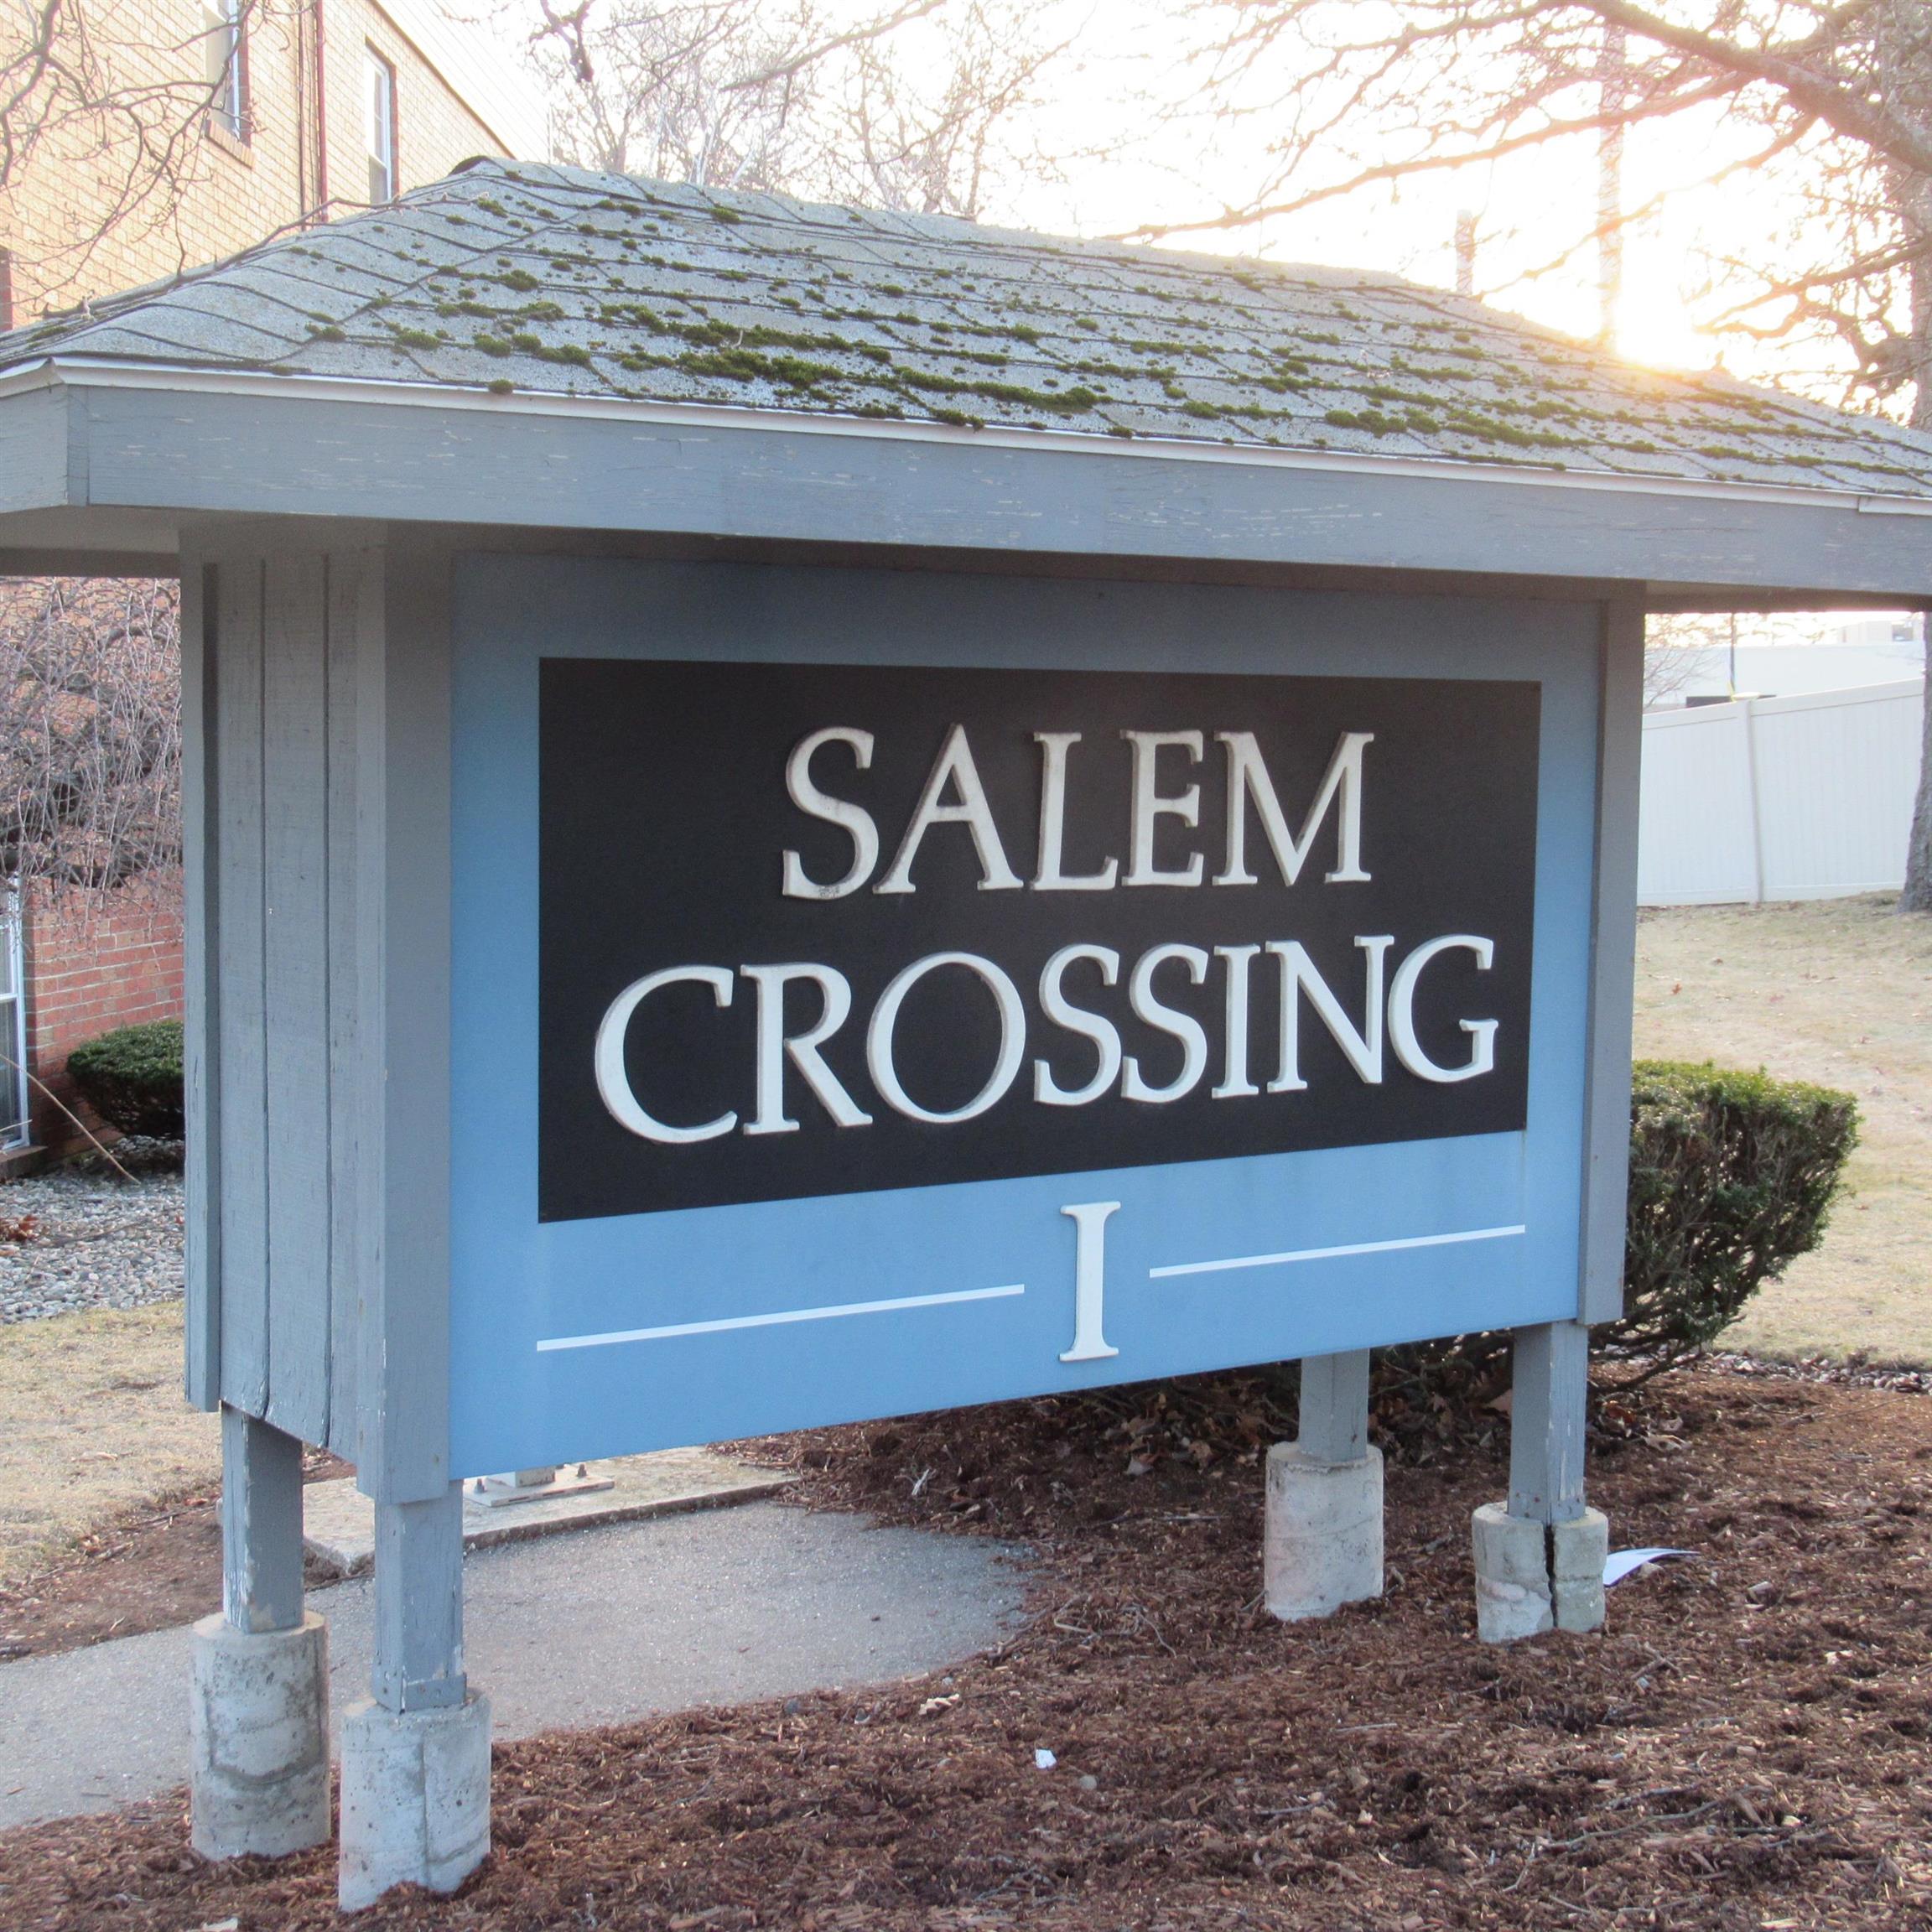 MLS 4993398: 99 Cluff Crossing, Salem NH